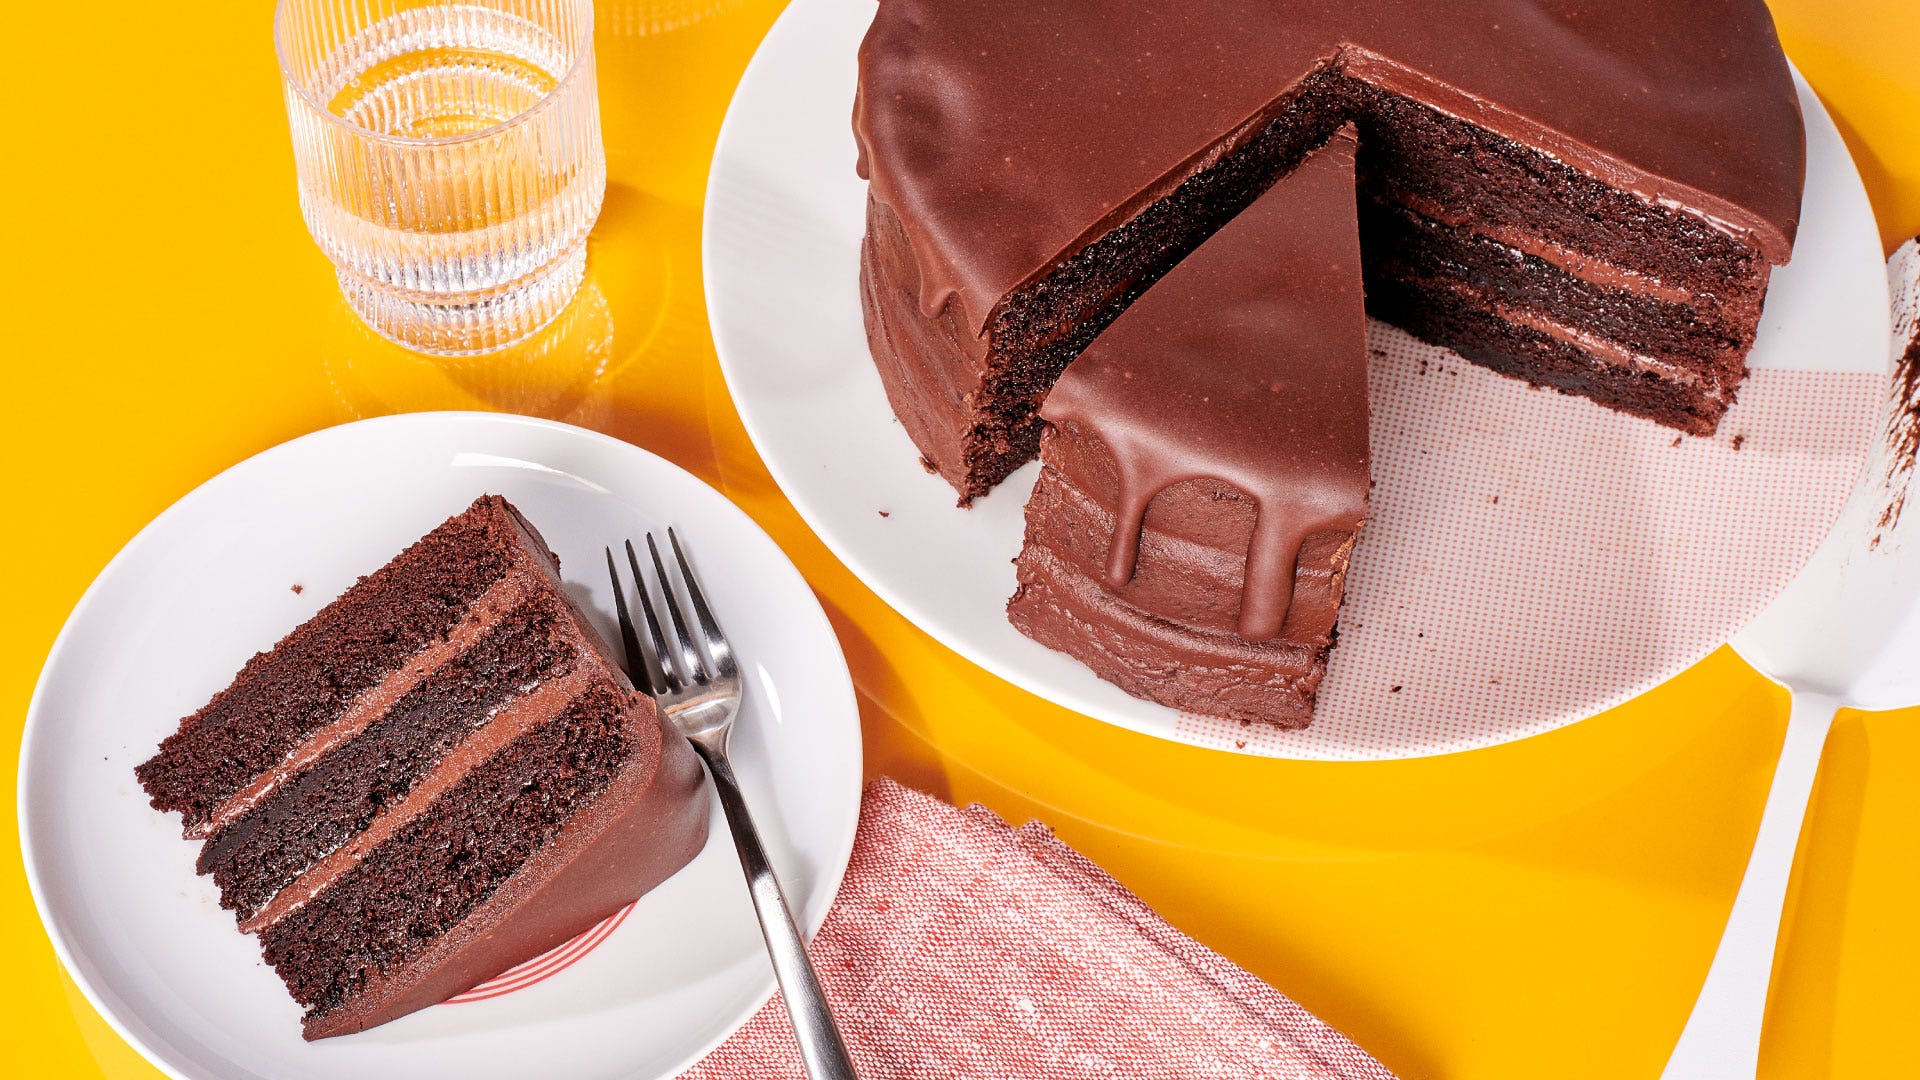 hershey's perfectly chocolate chocolate cake